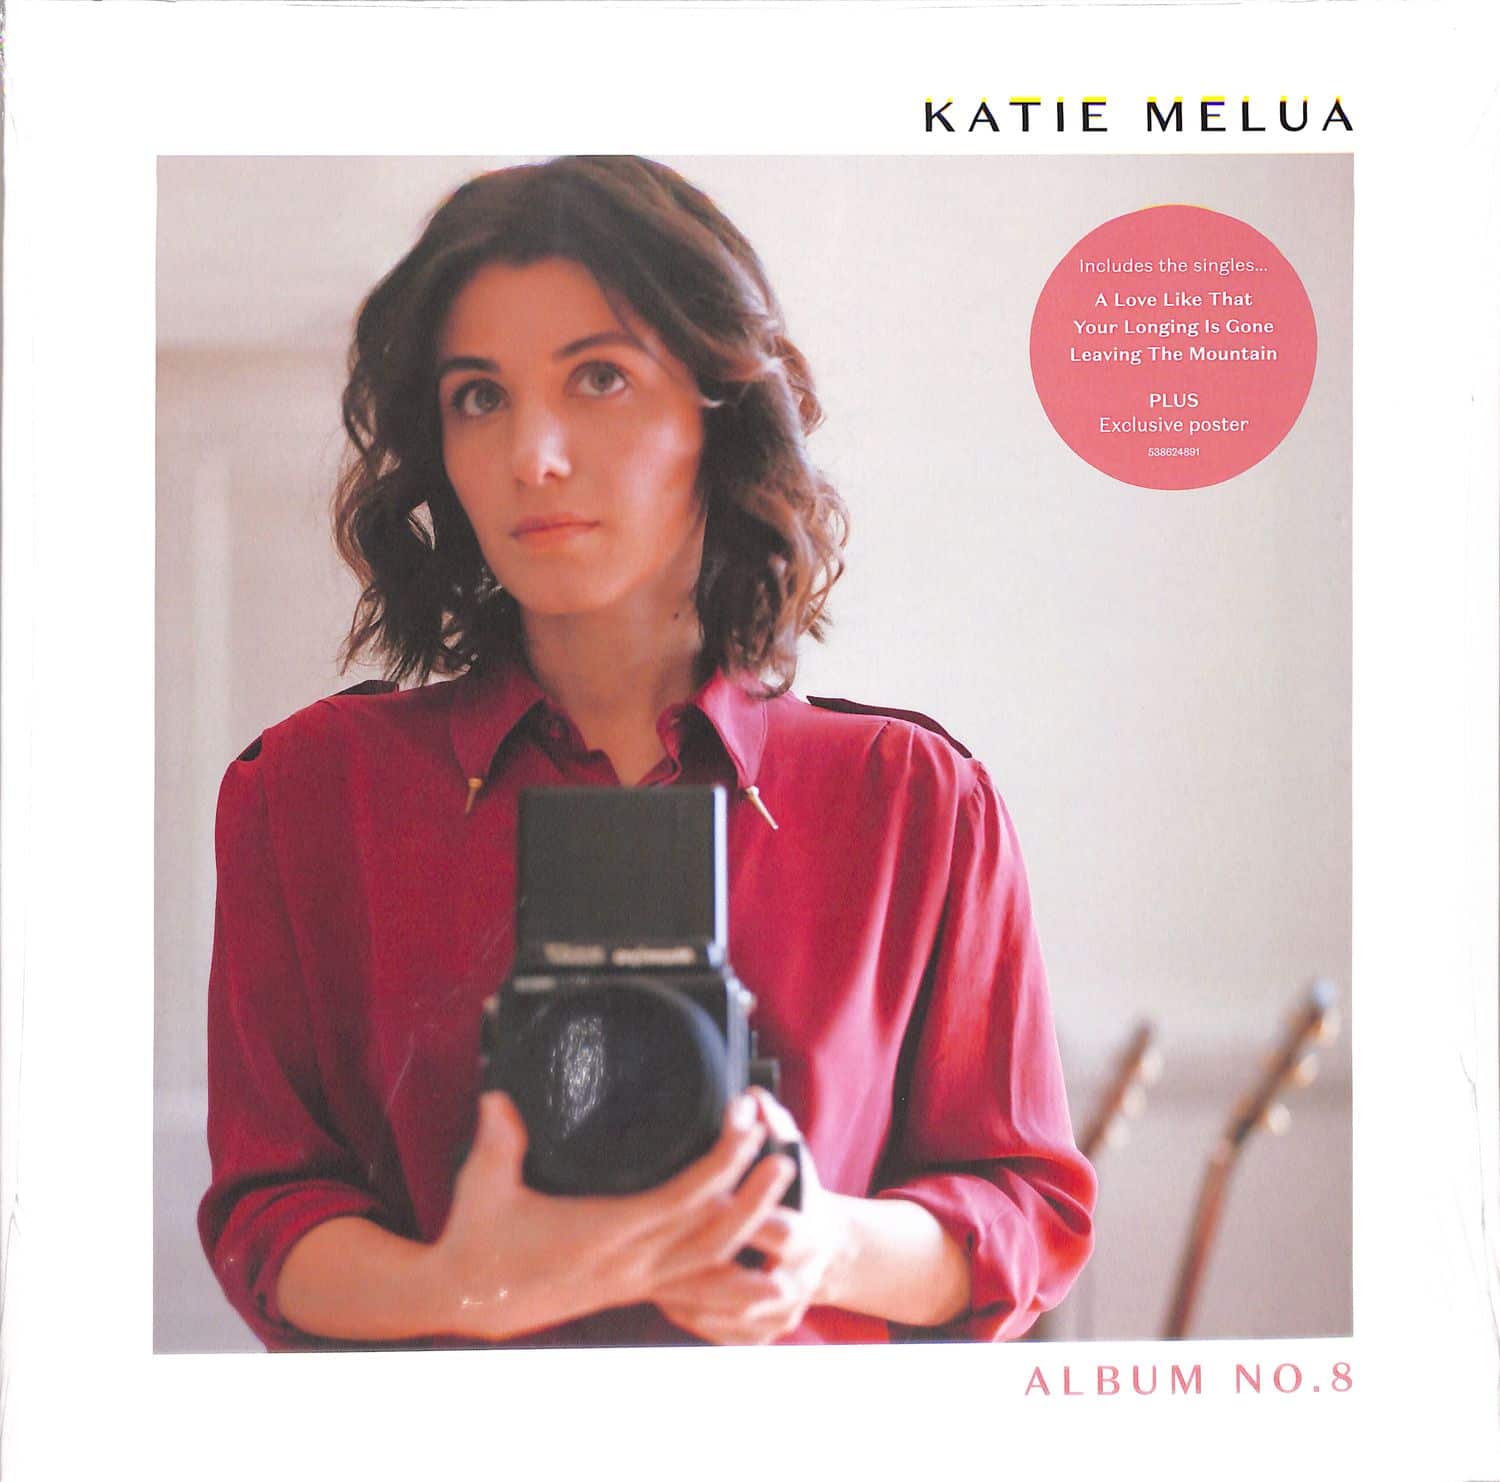 Katie Melua - ALBUM NO.8 